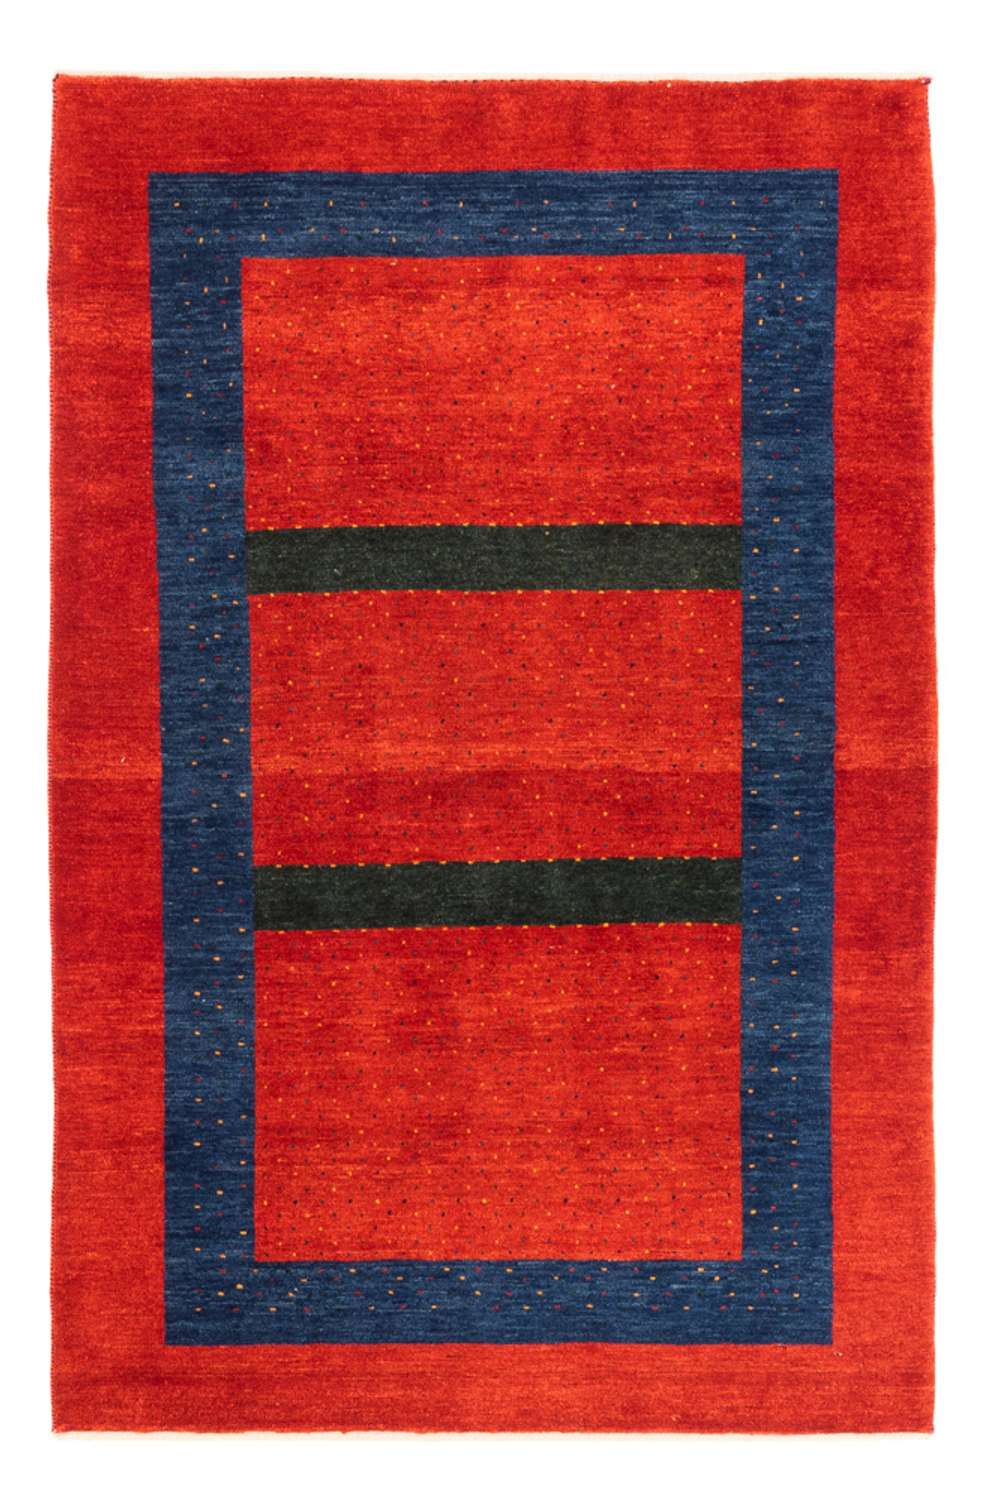 Gabbeh-teppe - persisk - 158 x 103 cm - rød